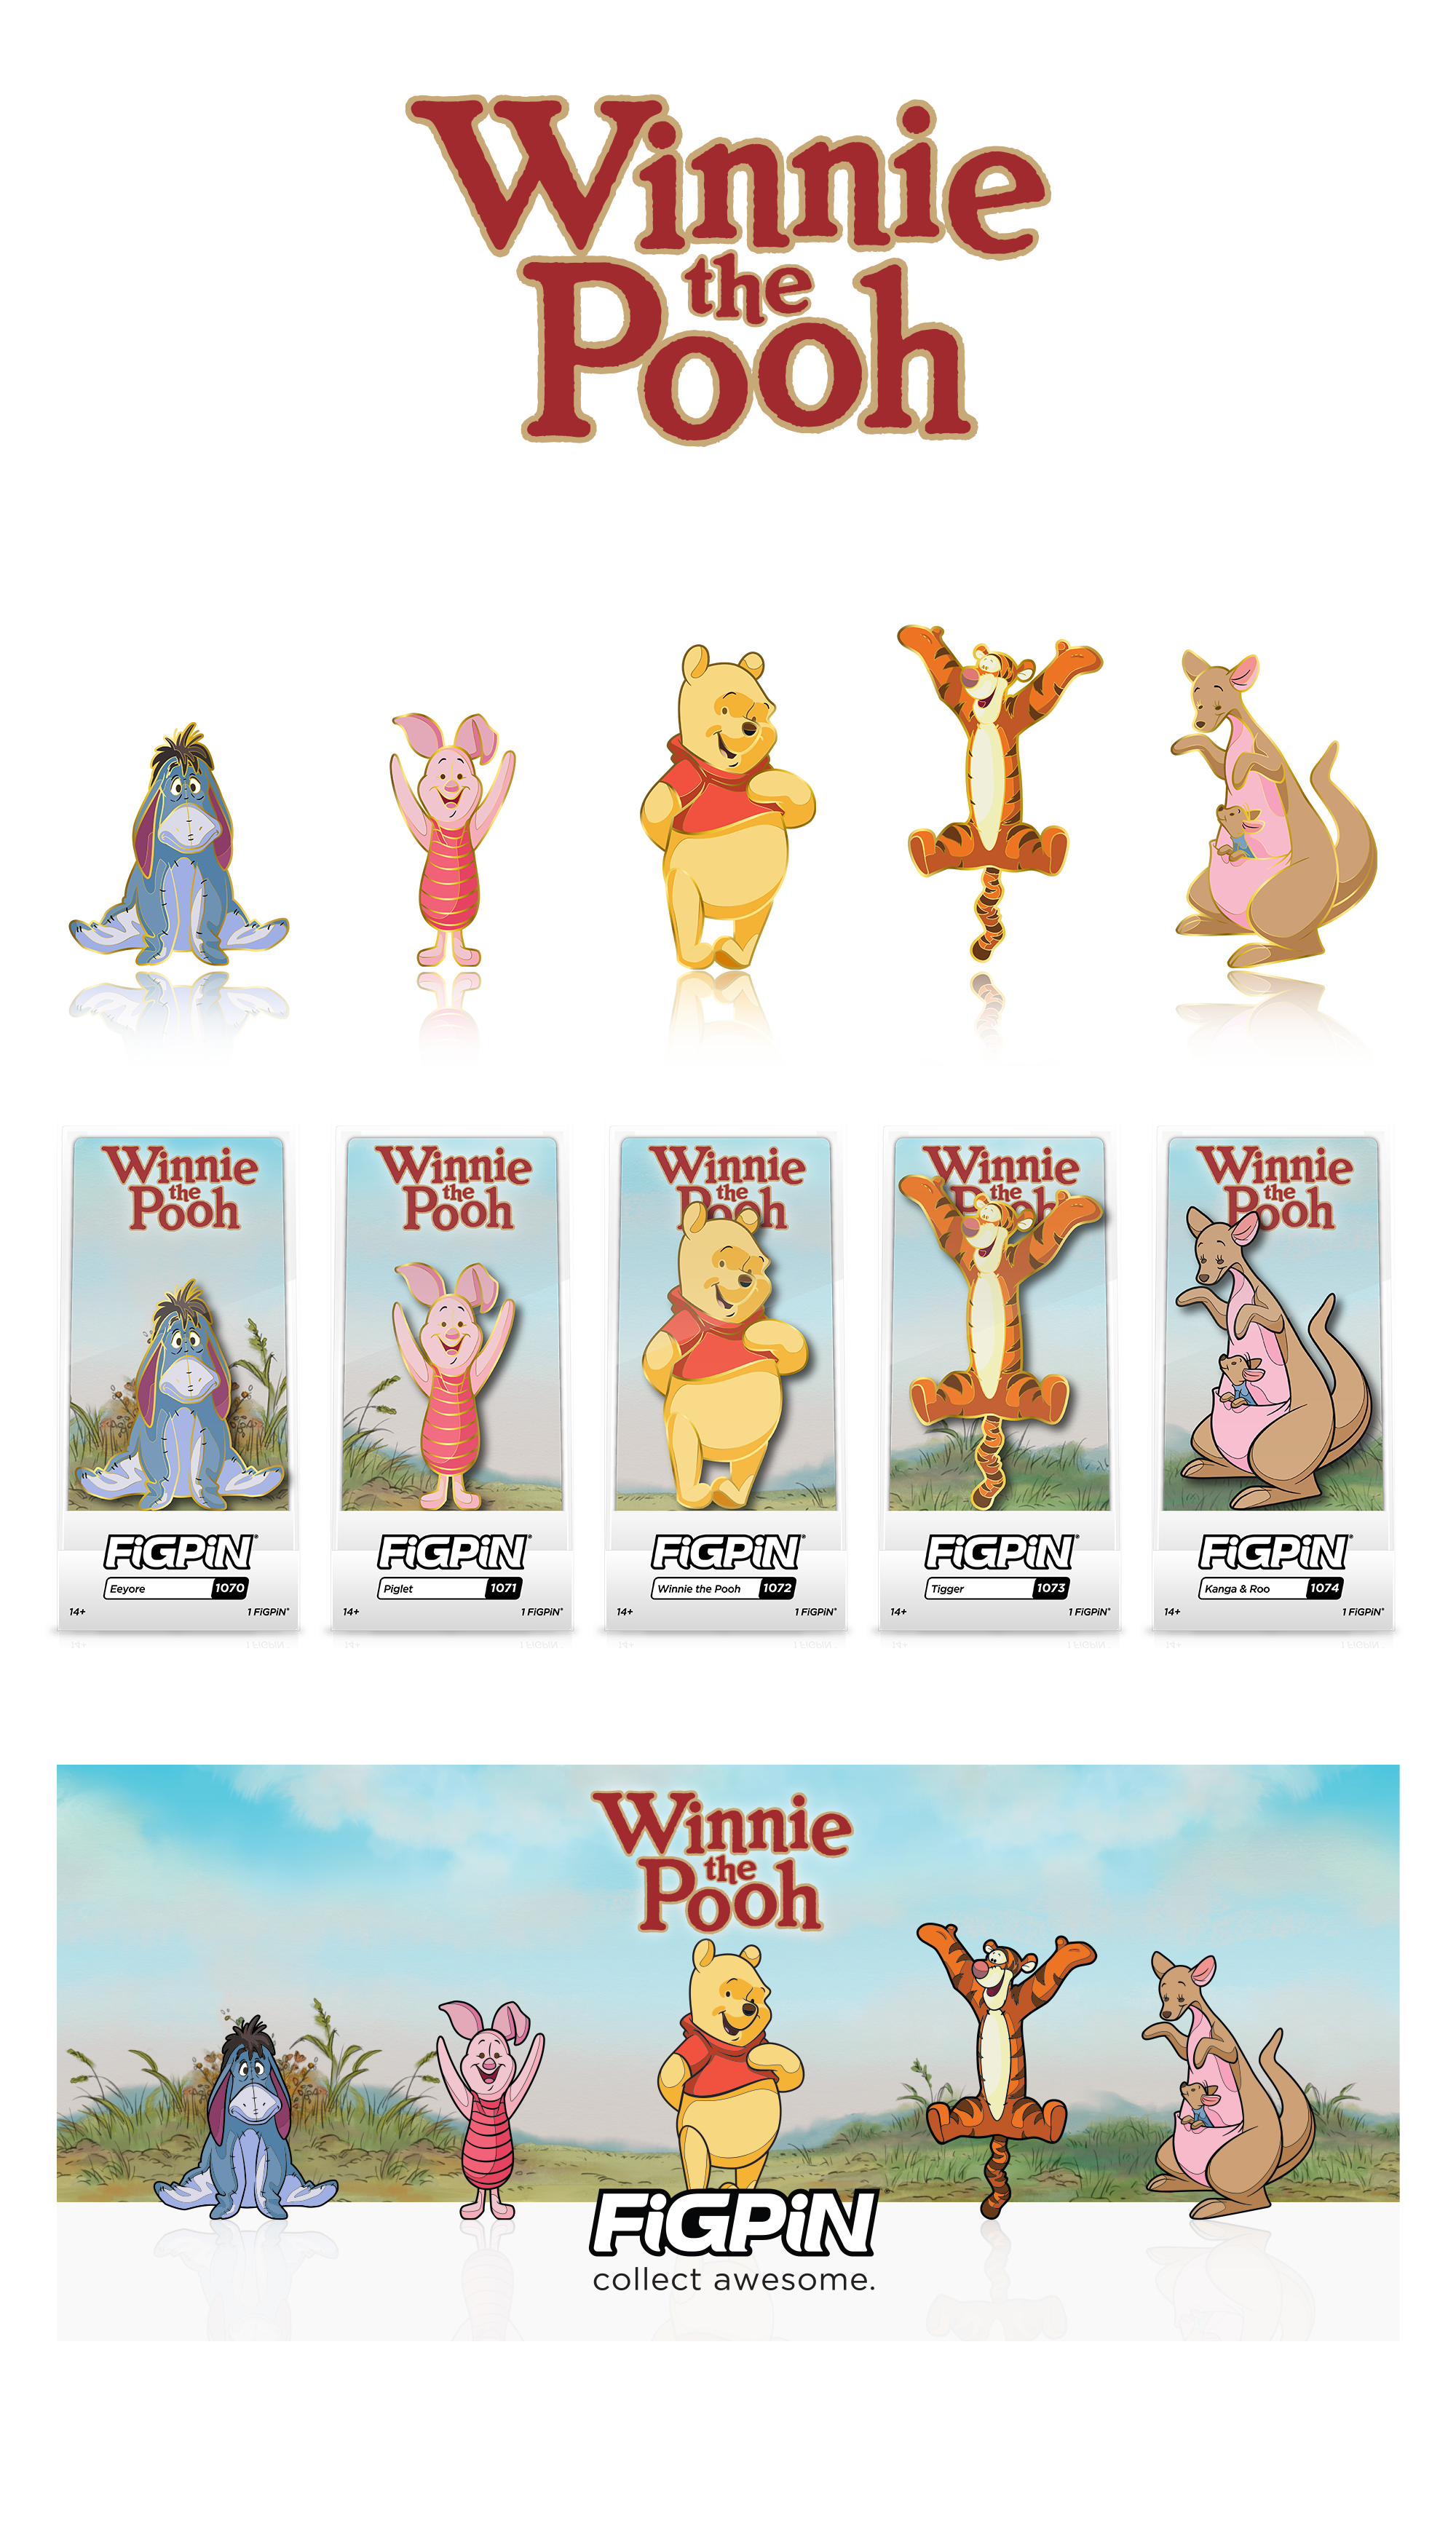 pooh characters names